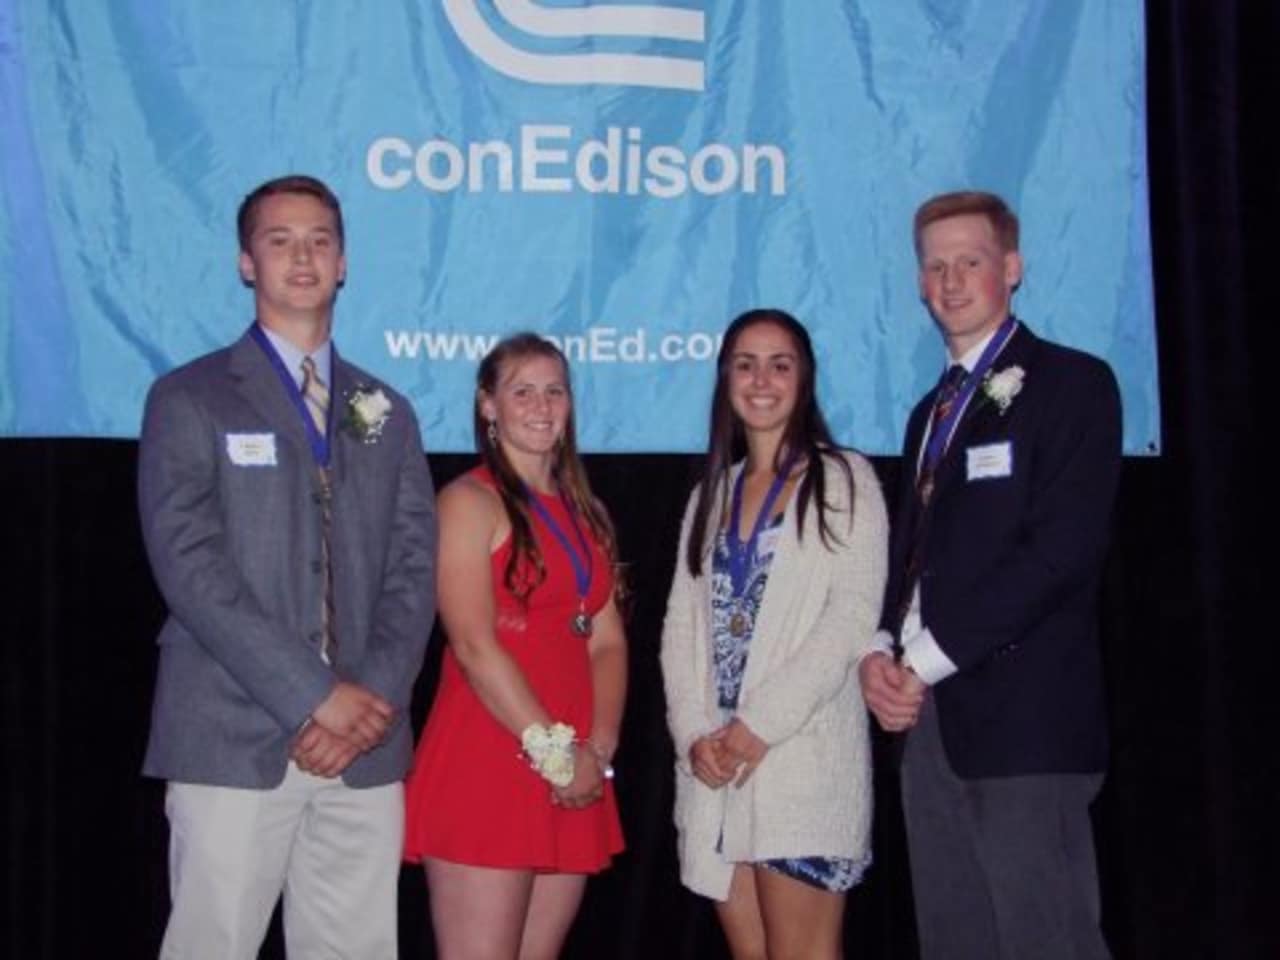 Con Edison Westchester Scholastic Sports Award winners were recognized June 3 in Harrison.